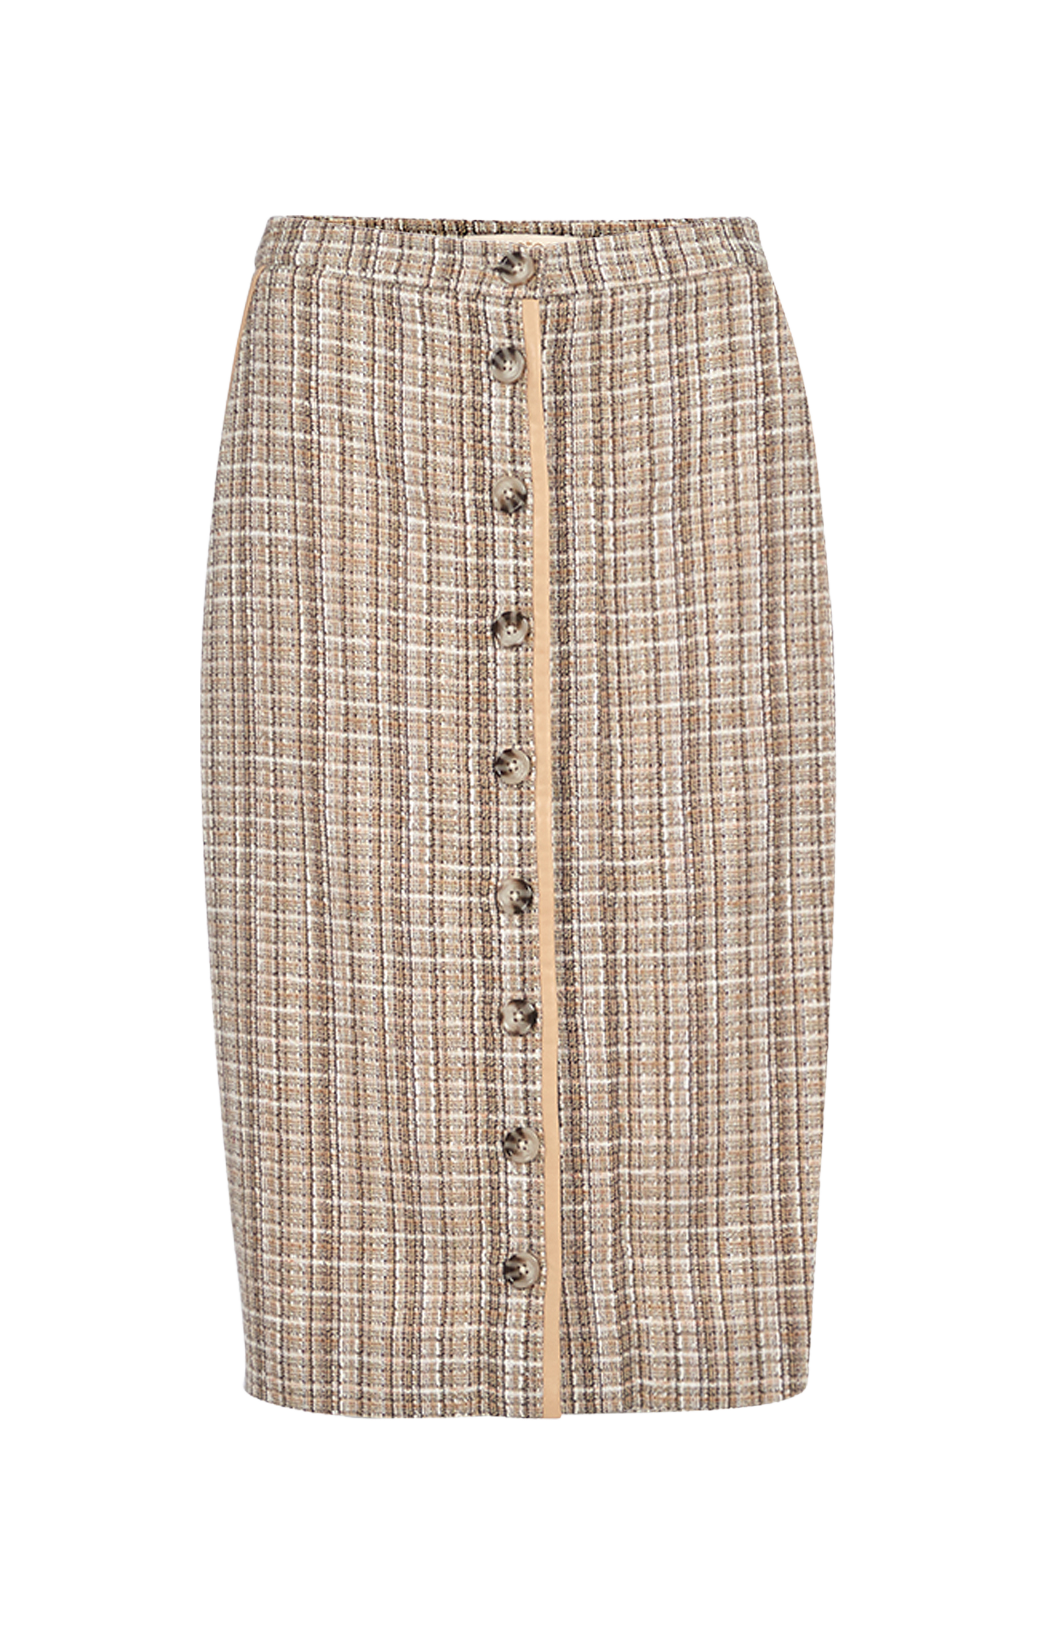 Basilica Skirt